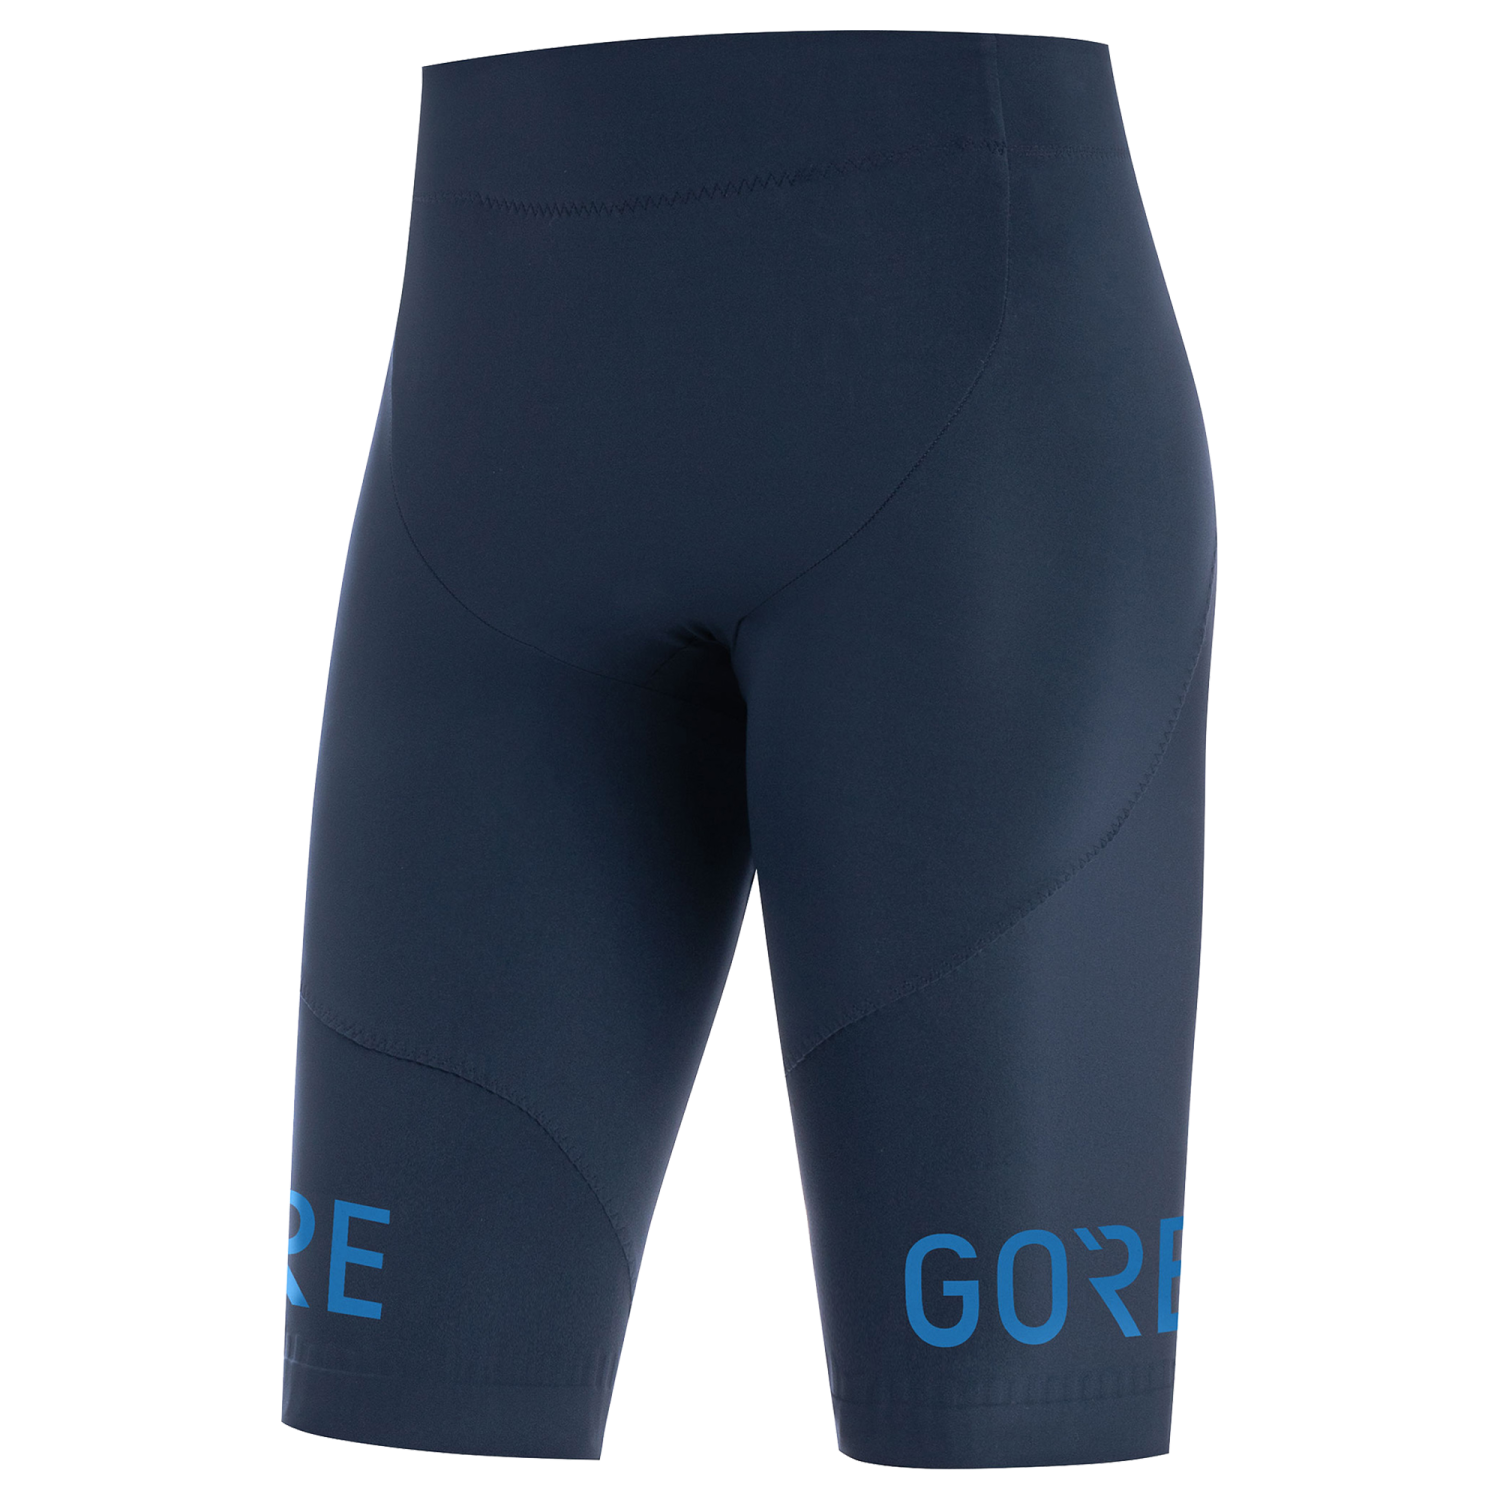 GOREWEAR C7 Women's Long Distance Cycling Short Tights+ in Orbit Blue | Large (12-14) | Form fit | Windproof